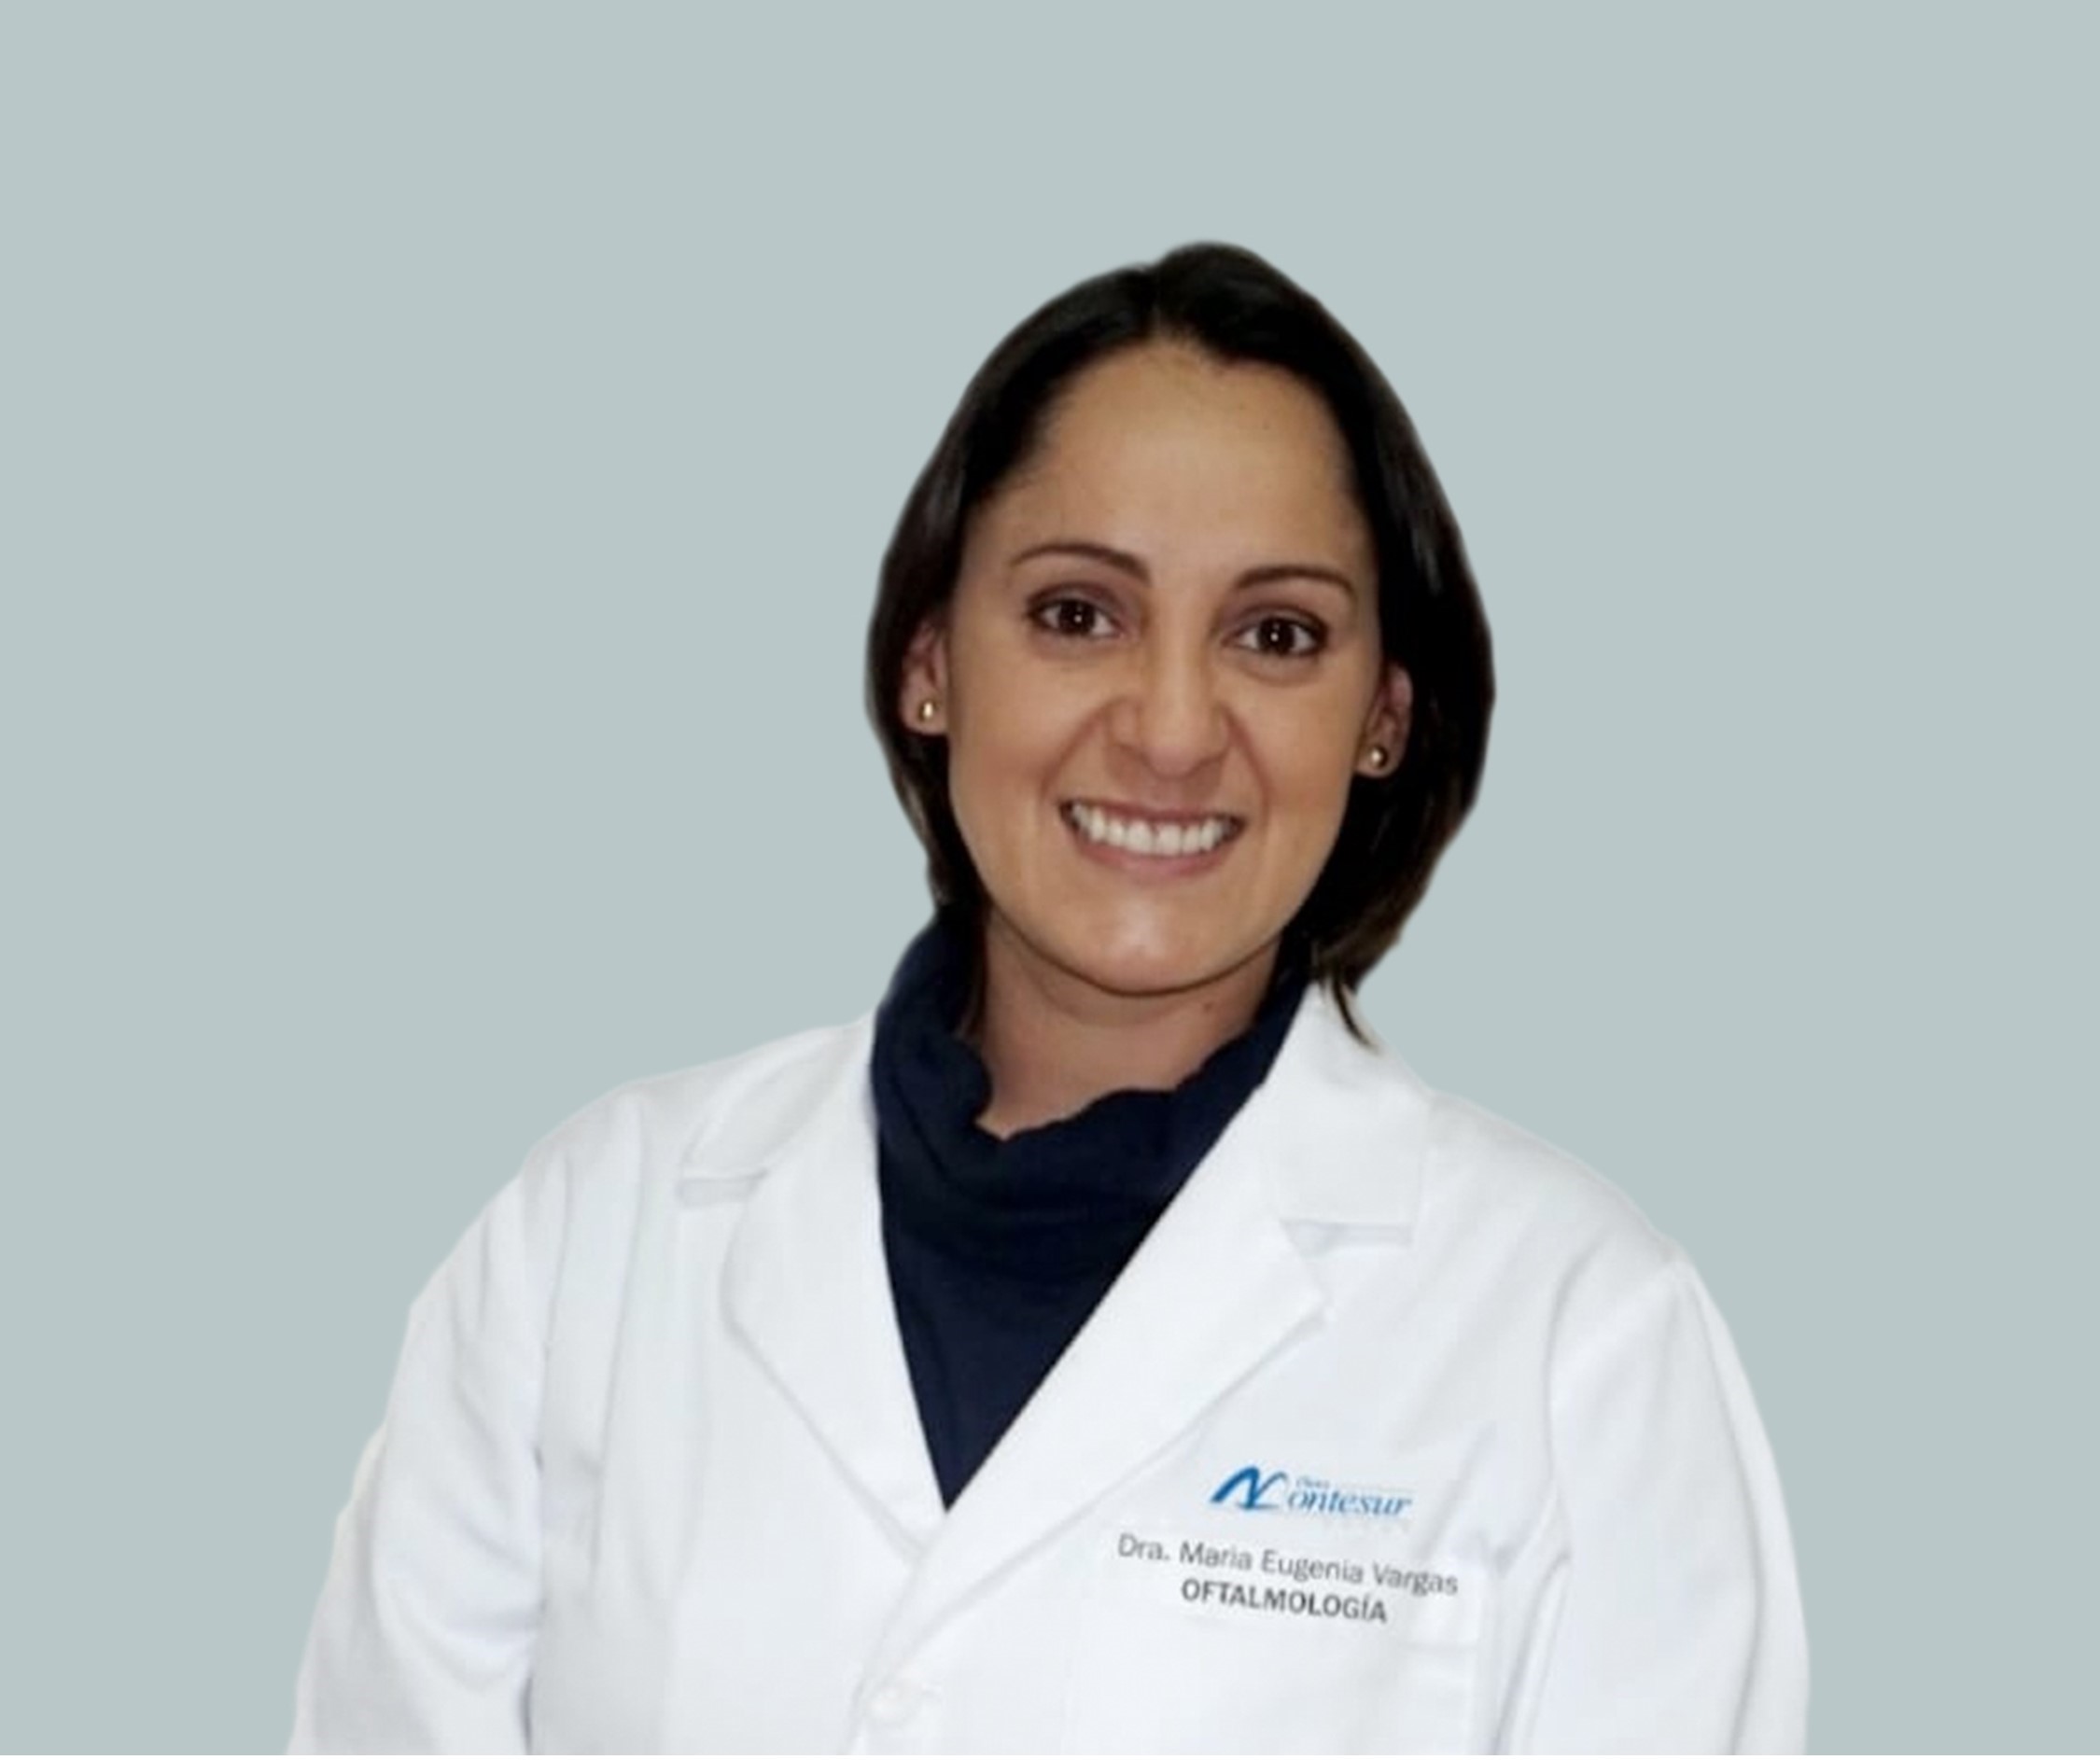 Dr. Maria EUGENIA Vargas oftalmologos oftalmologia Oftalmologo Oftalmólogo